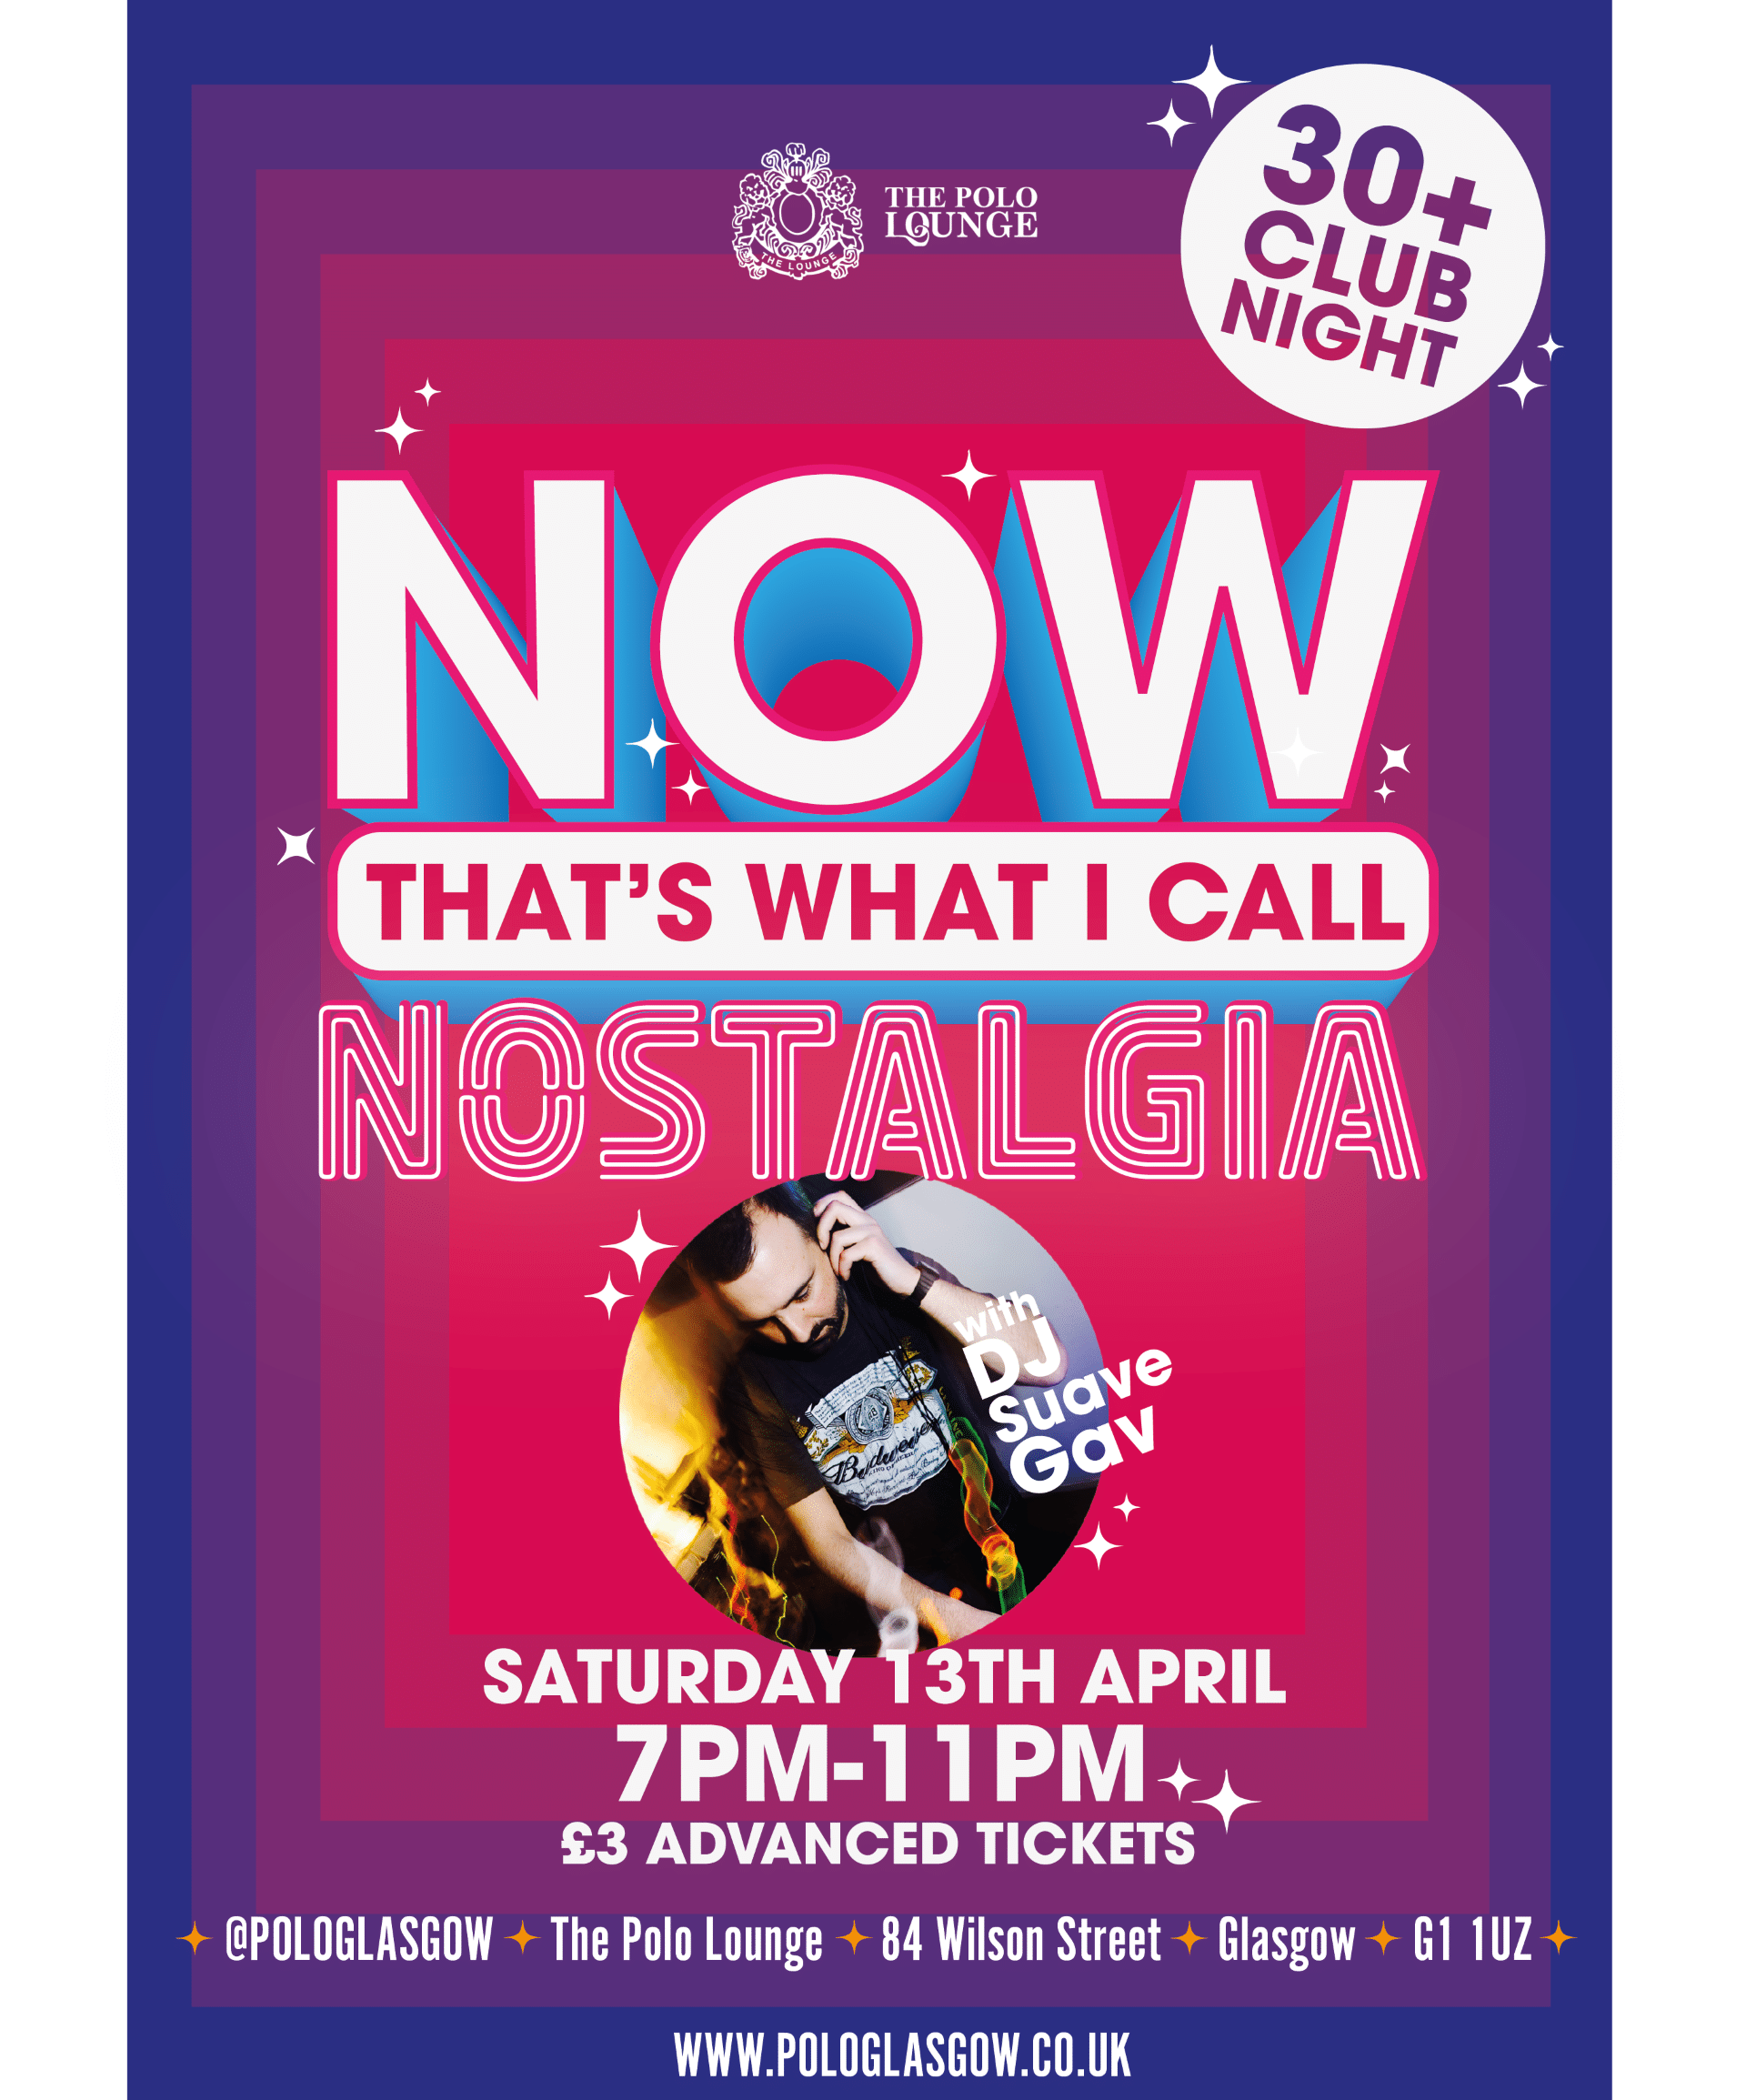 Now That’s What I Call Nostalgia! 30+ Club night